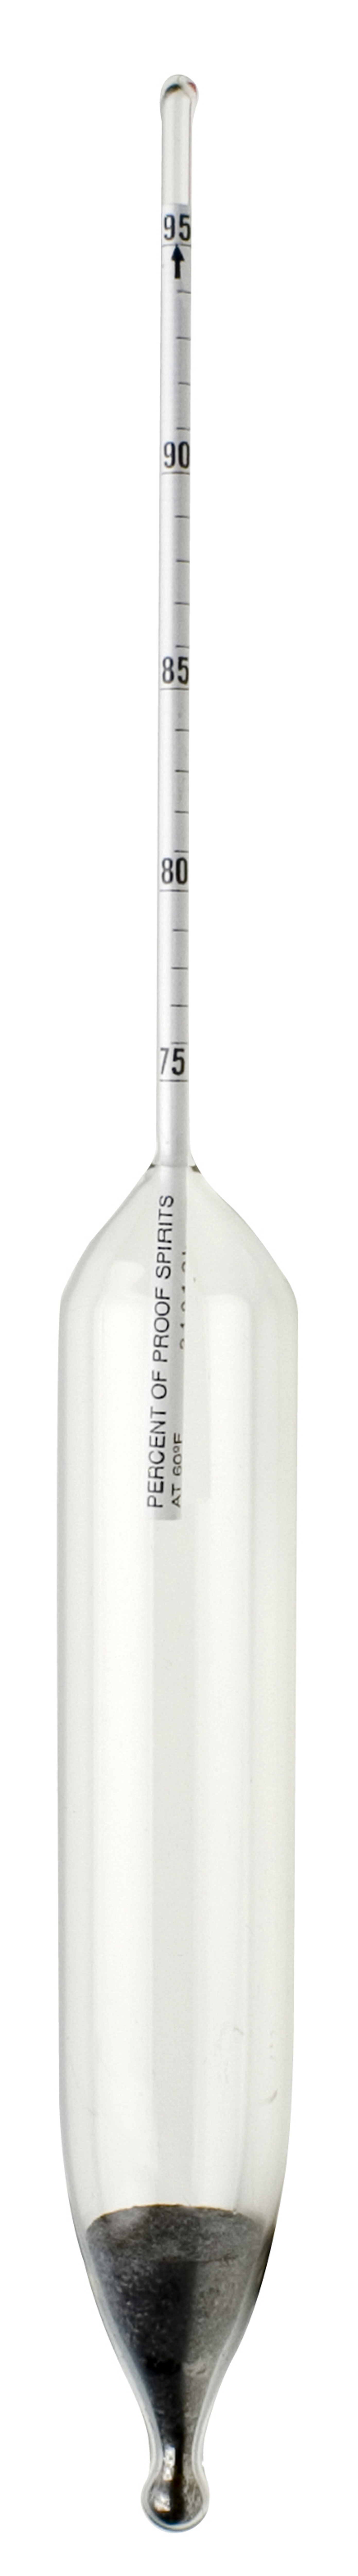 SP Bel-Art, H-B DURAC 125/145 Percent Alcohol Proof – Ethyl Alcohol Hydrometer